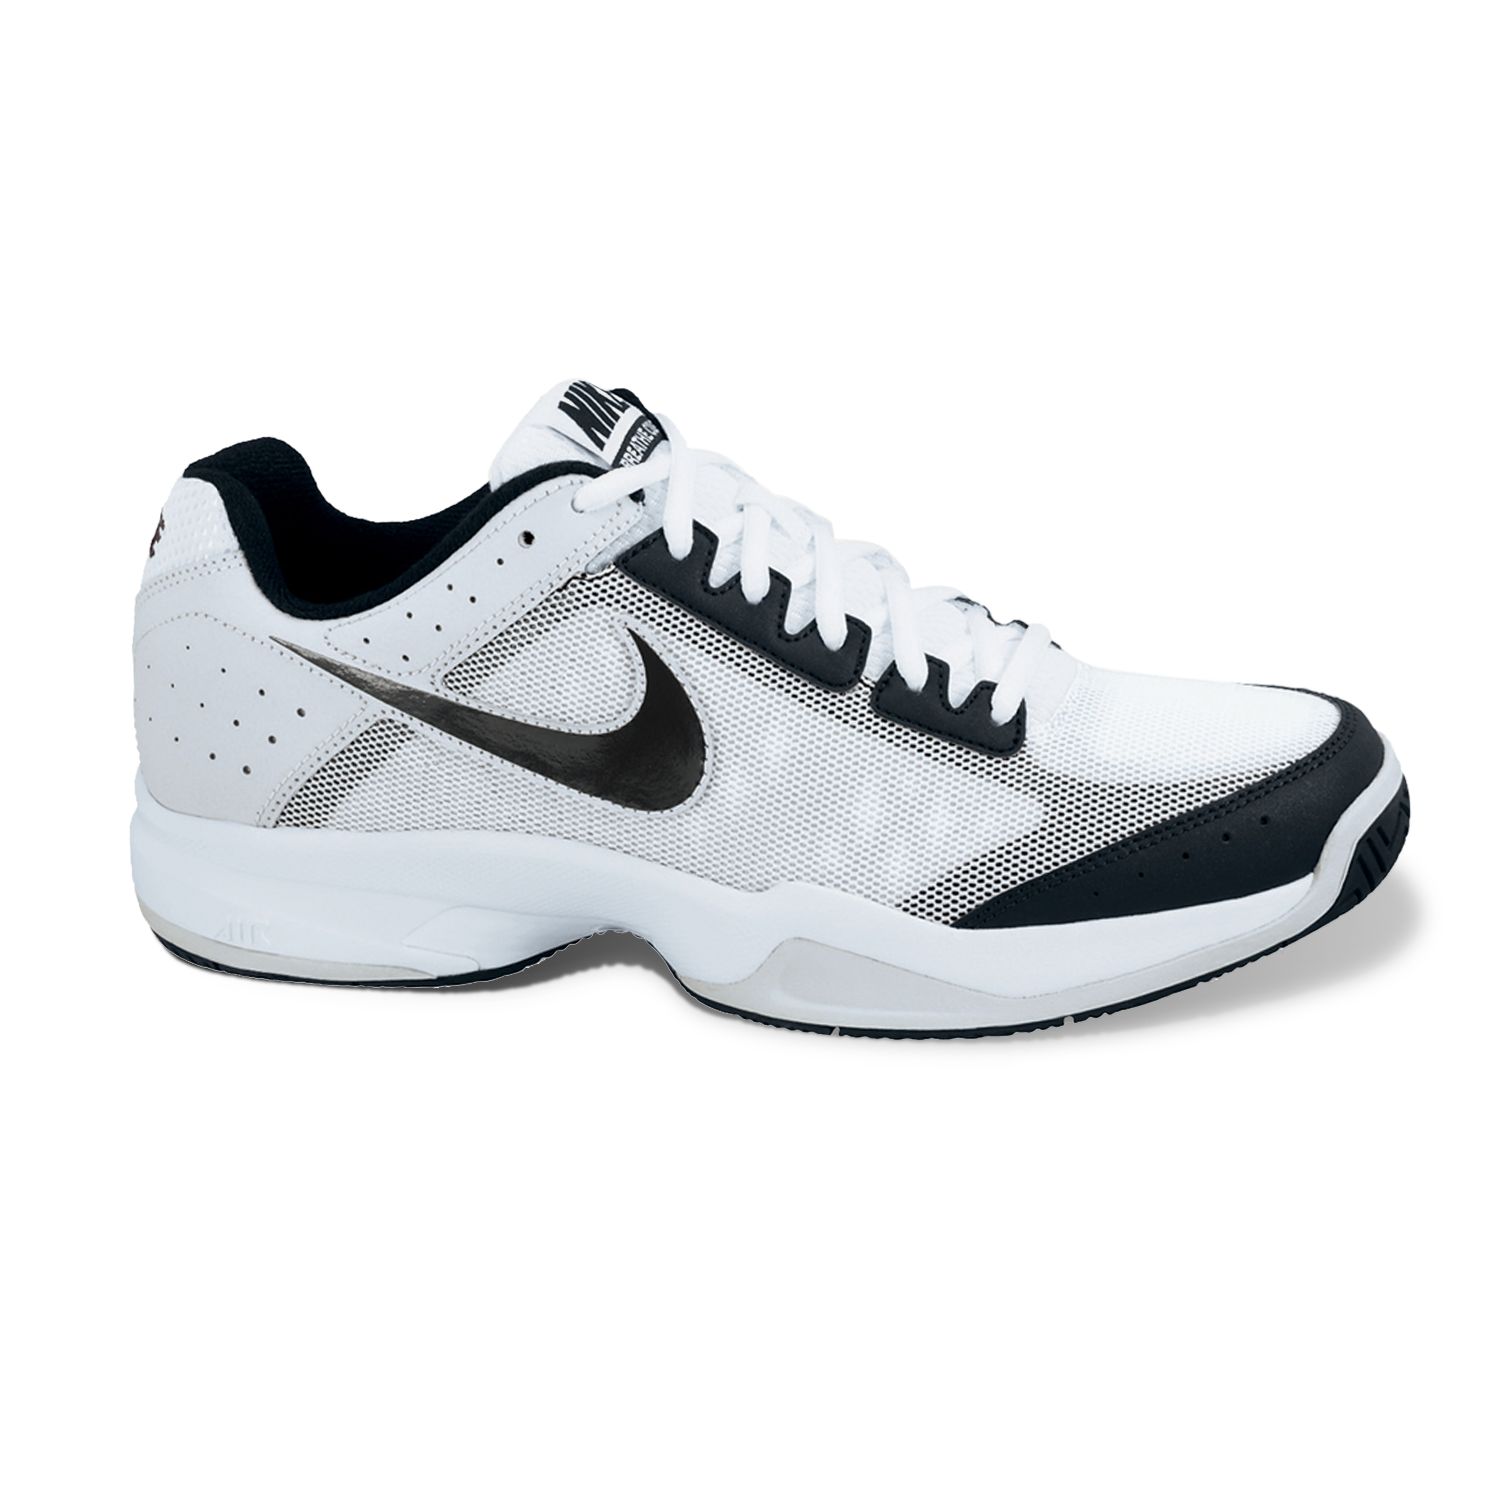 Nike Air Cage Court Tennis Shoes - Men